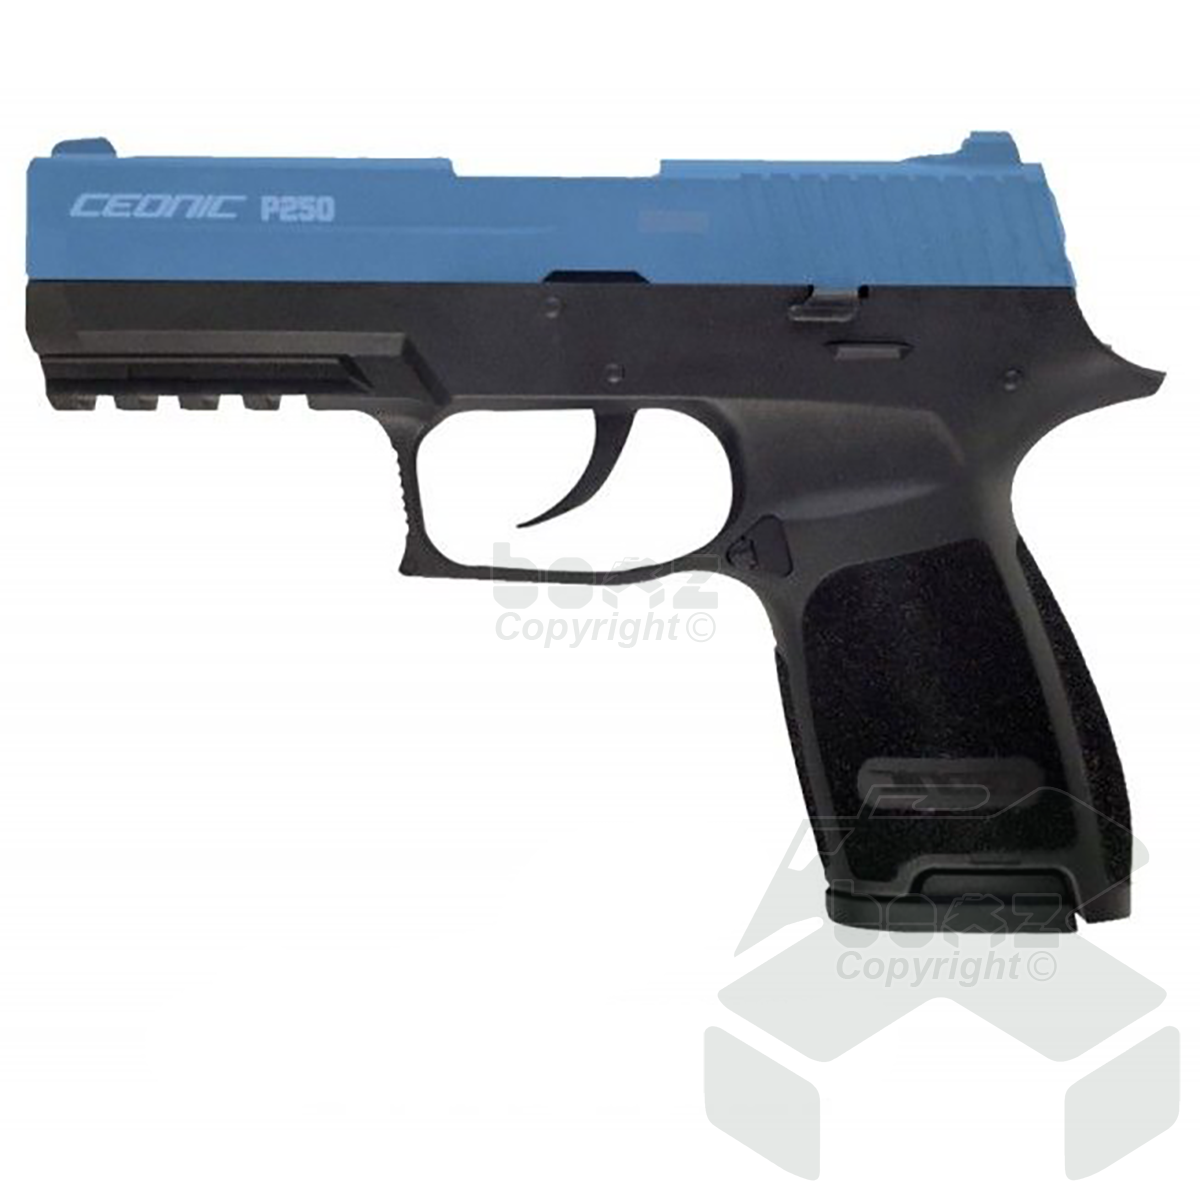 Ceonic p250 Blank Firing Pistol - 9mm - Blue Black